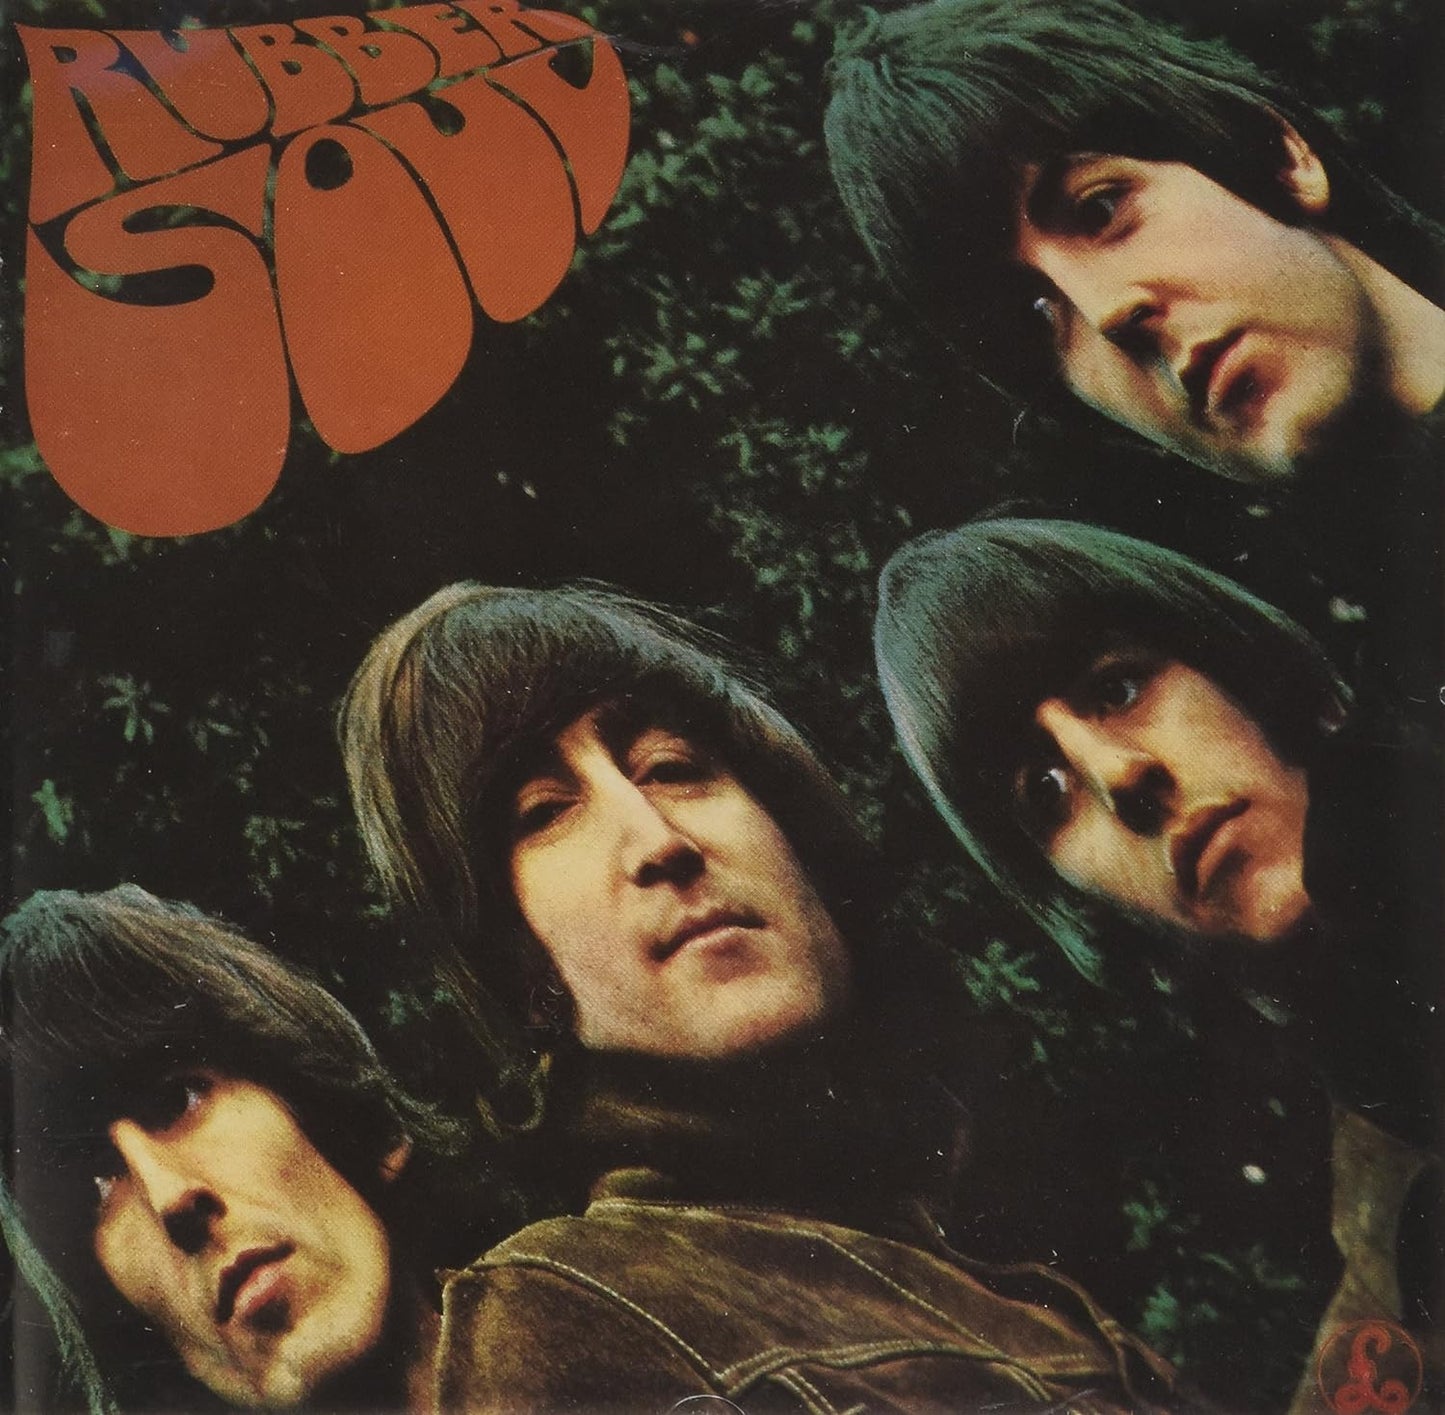 CD - The Beatles - Rubber Soul